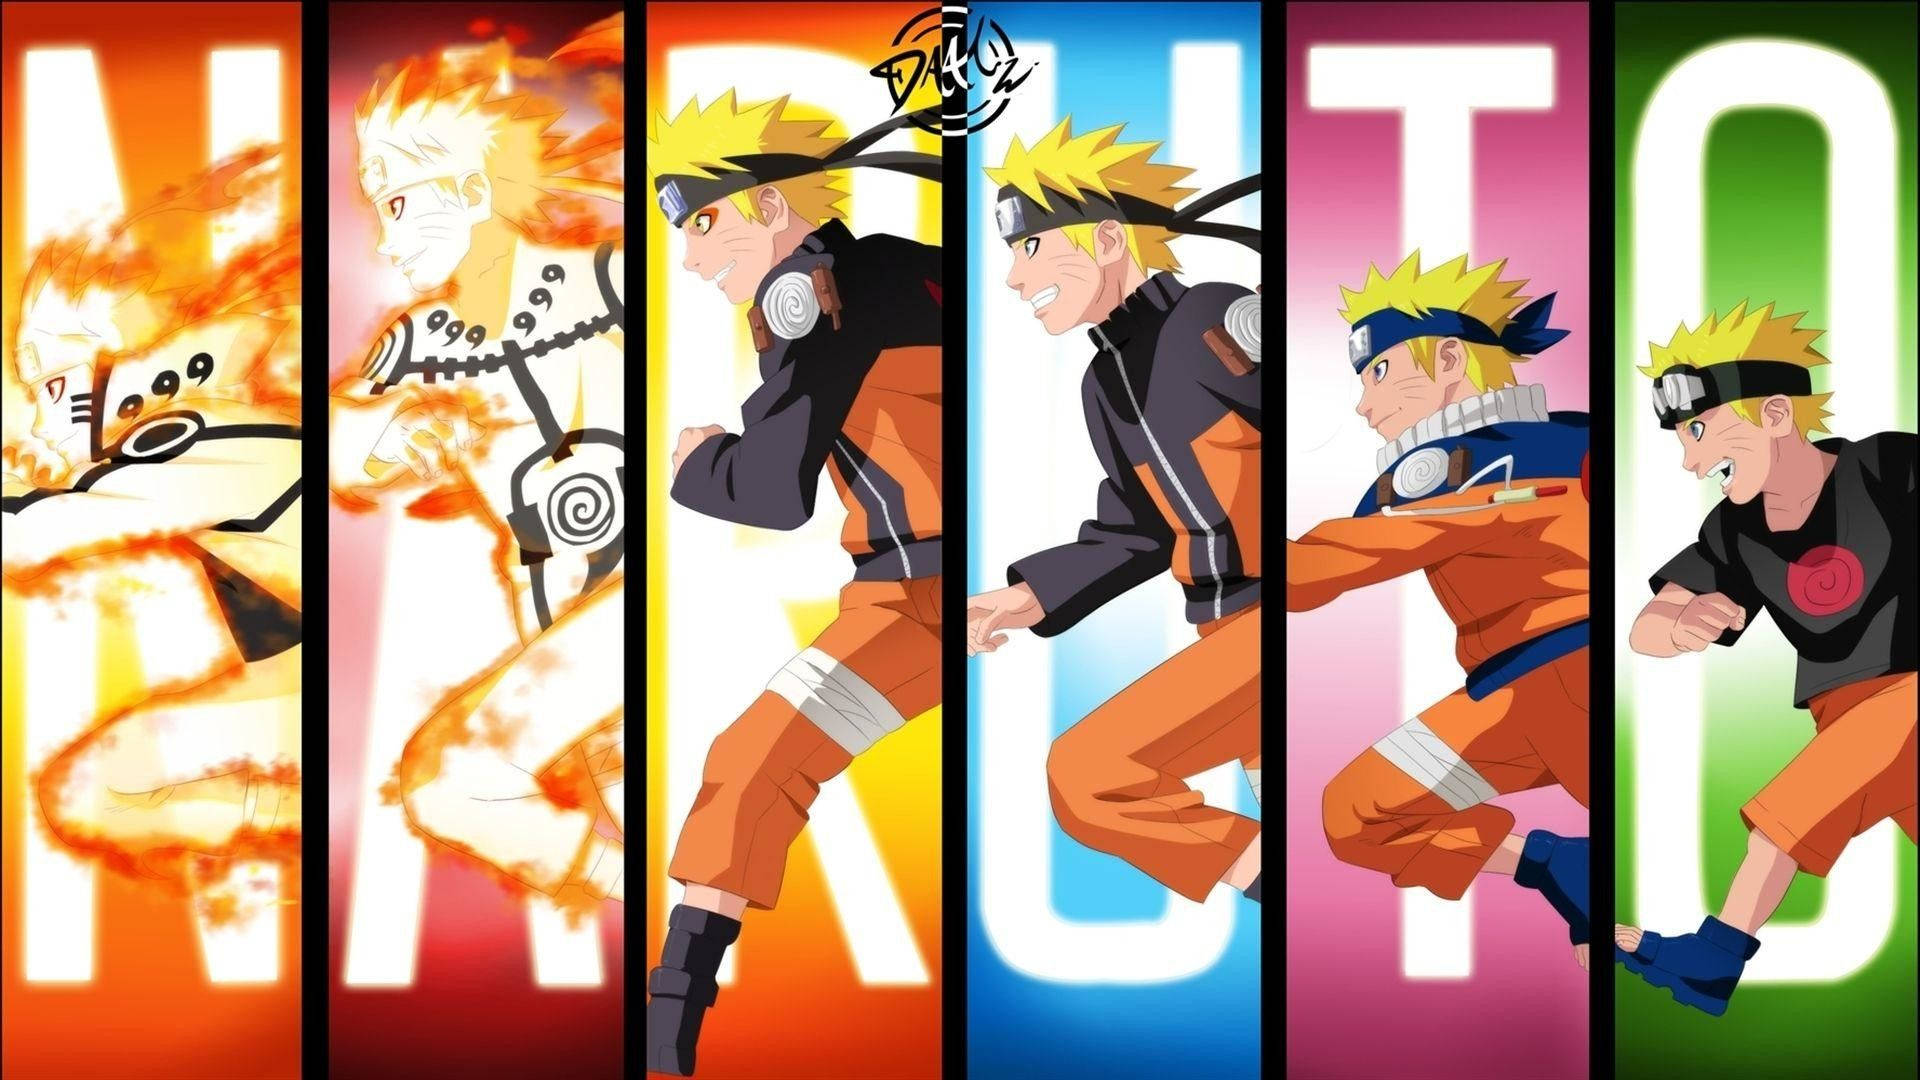 Free Naruto 4k Wallpaper Downloads, [200+] Naruto 4k Wallpapers for FREE |  